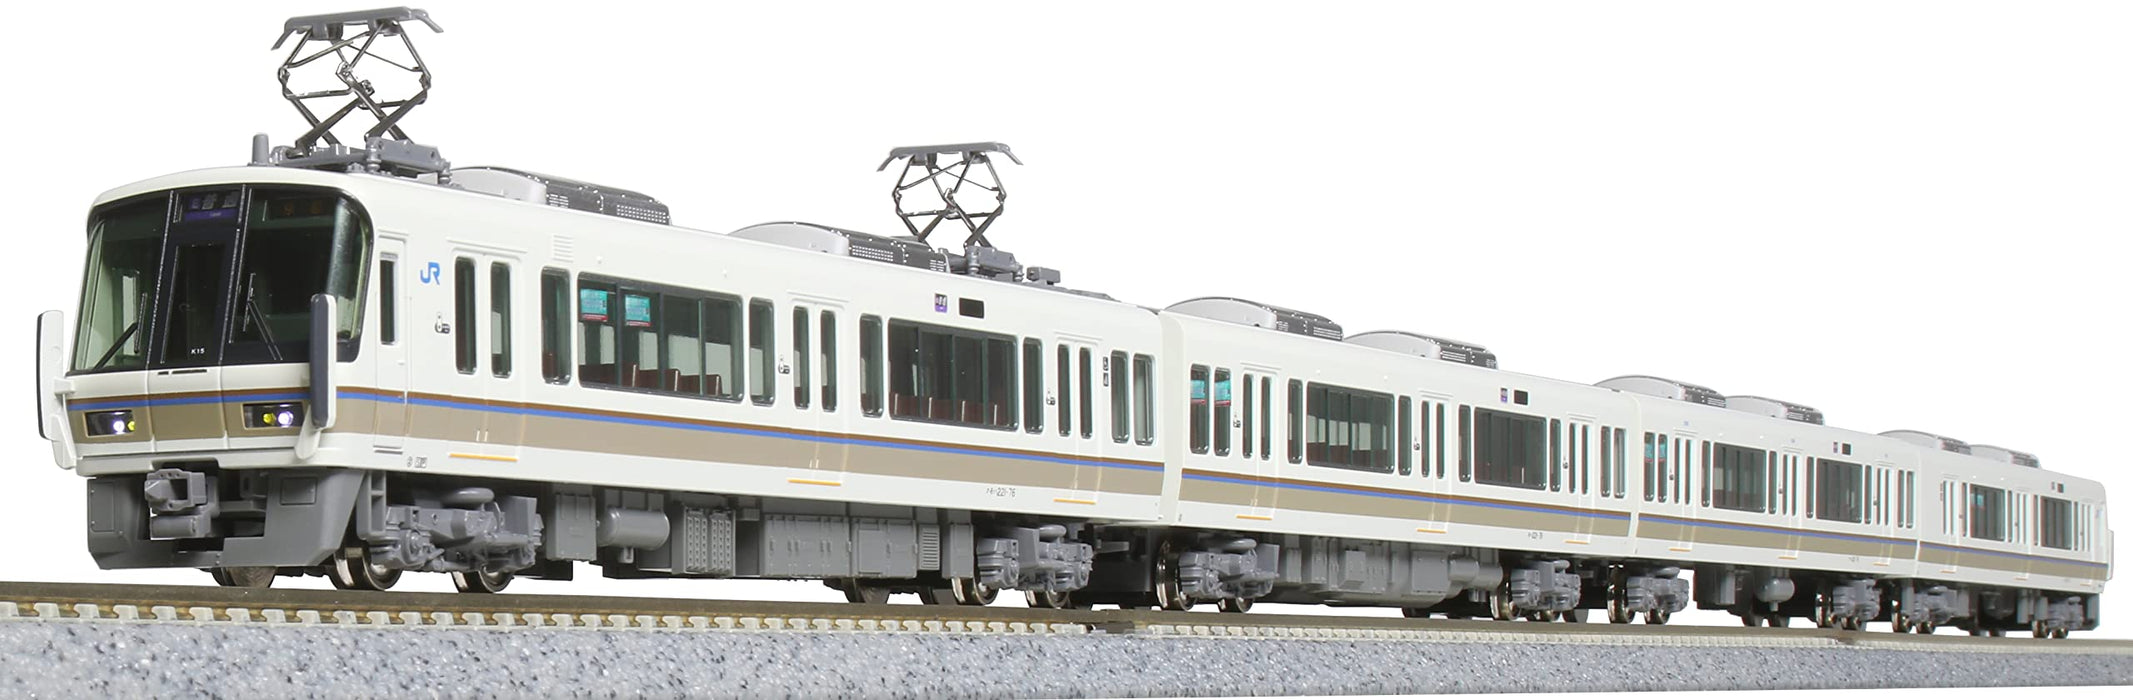 Kato N Gauge 221 Series 4-Car Train Model Set Renouvellement Voiture Sagano Line 10-1581